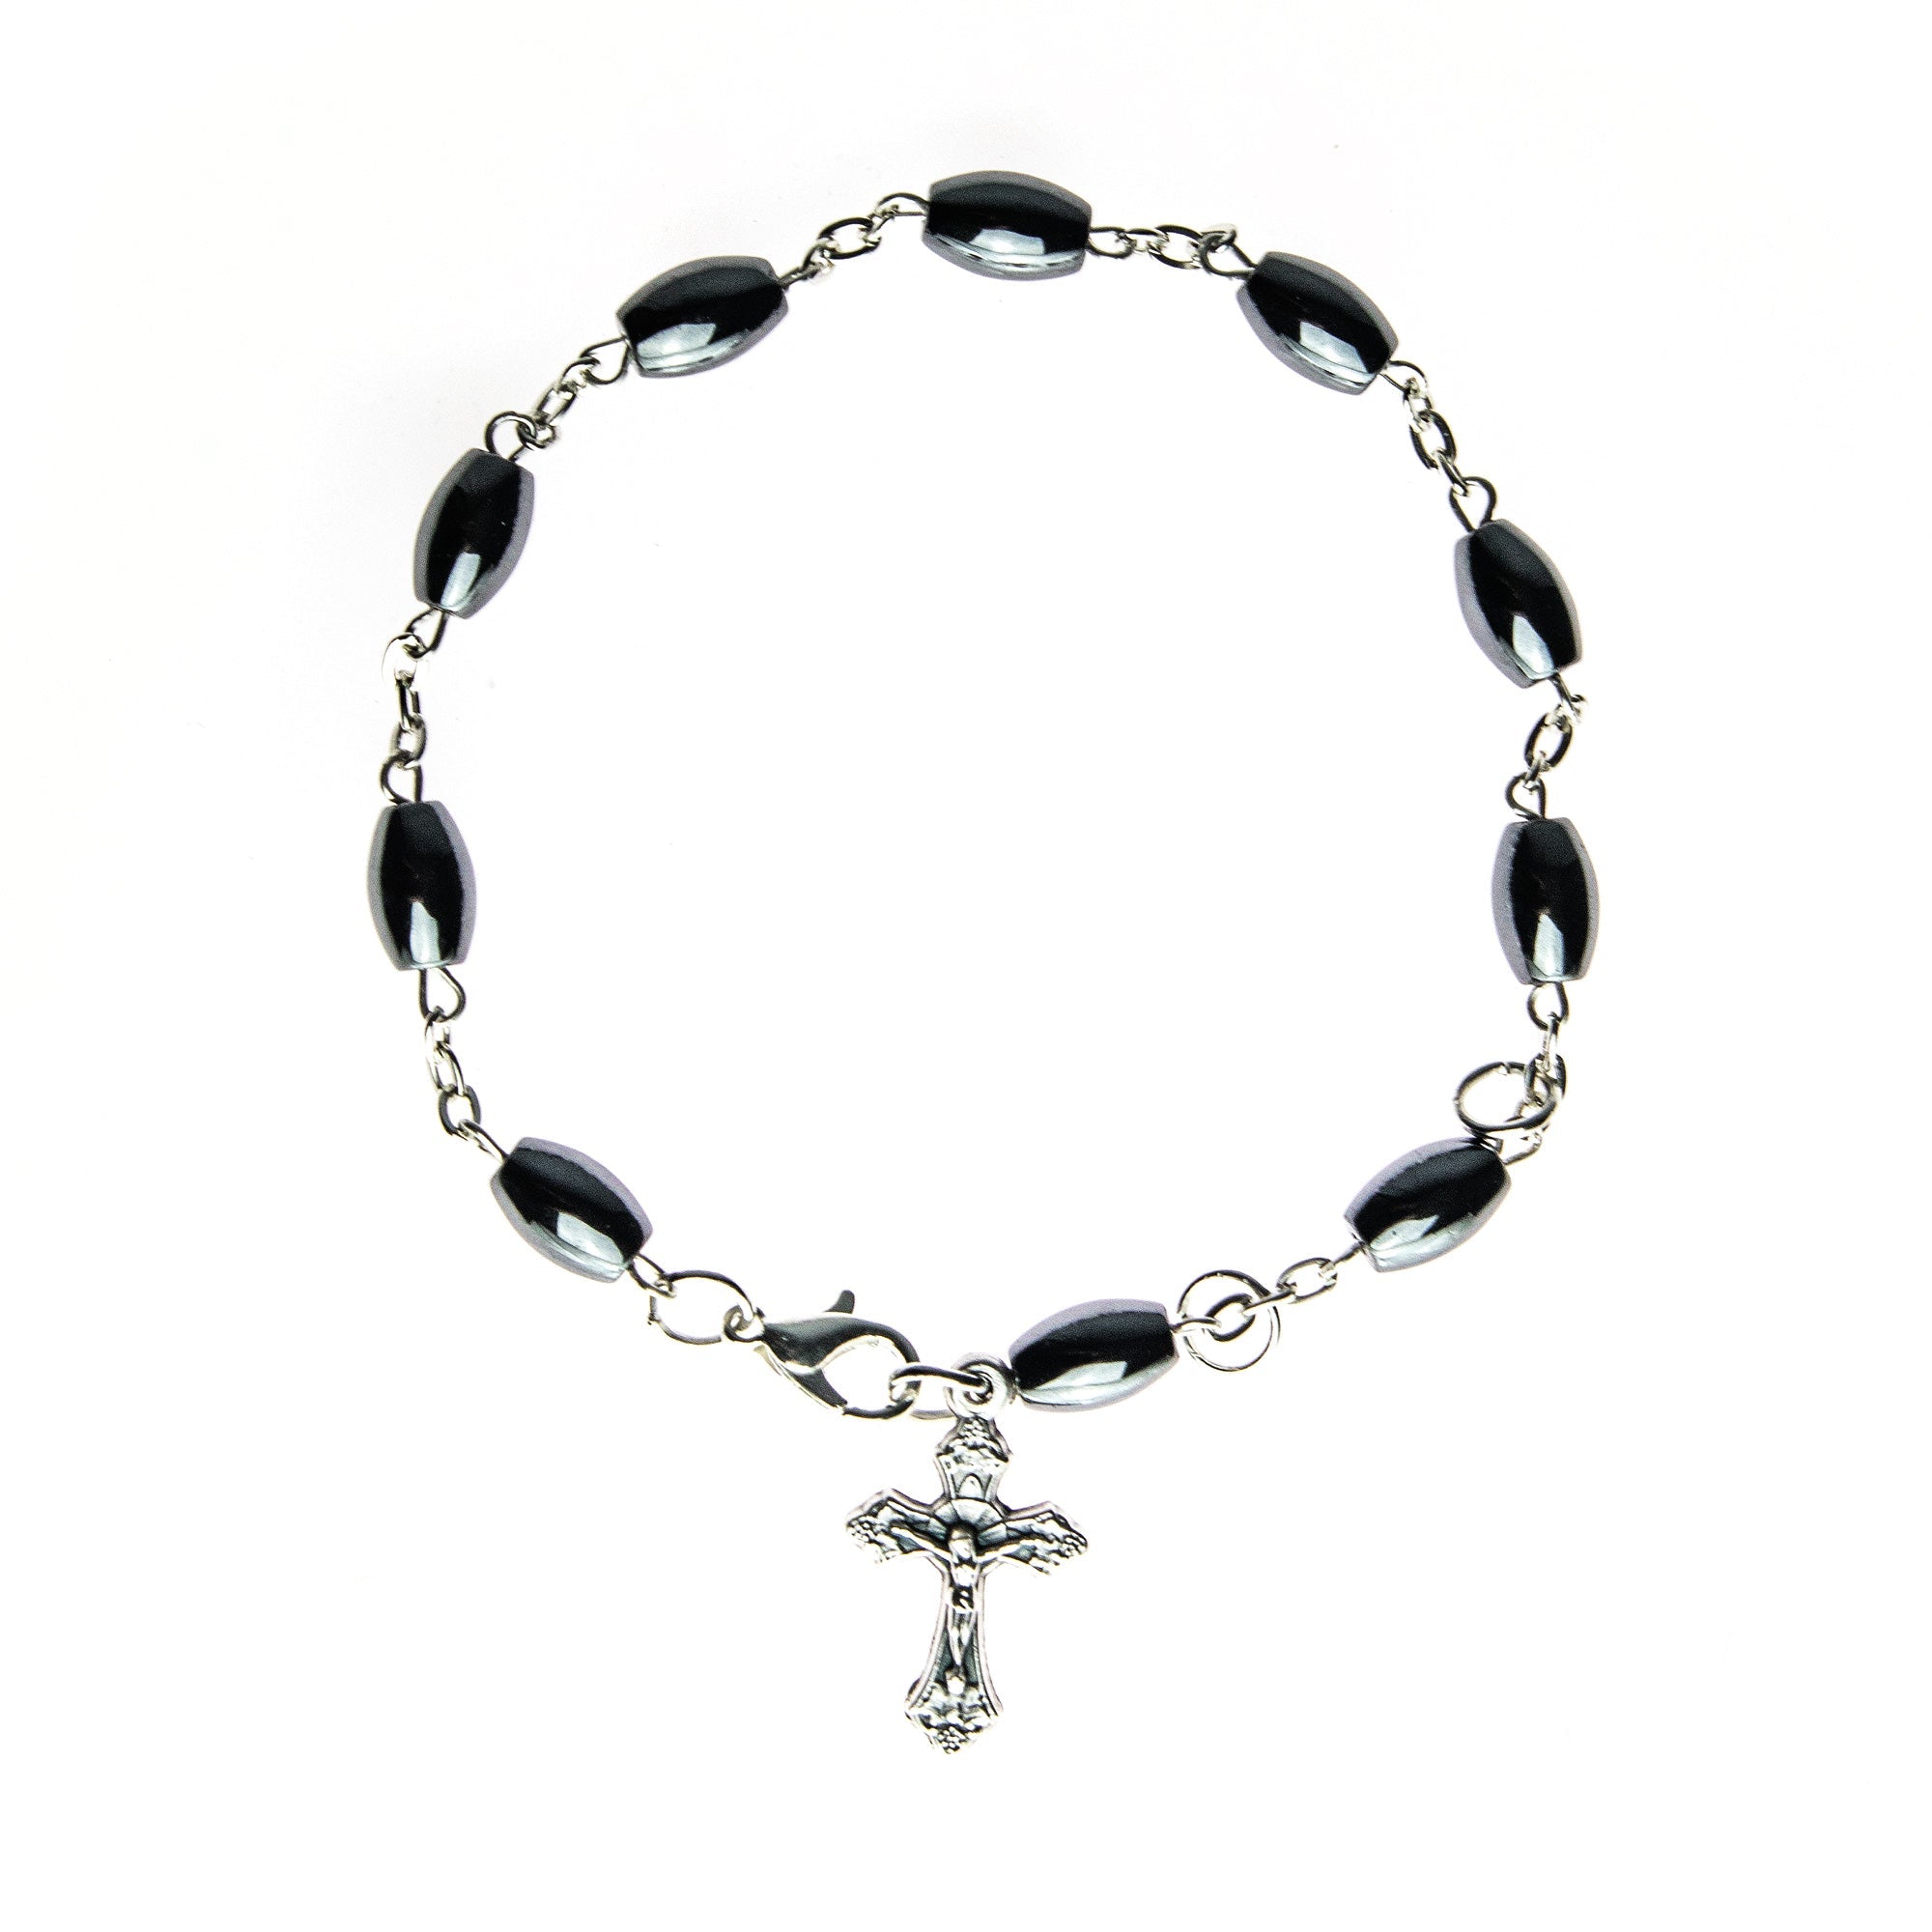 One Decade Hematite Catholic Rosary Charm Bracelet with Crucifix Cross Pendant Charm